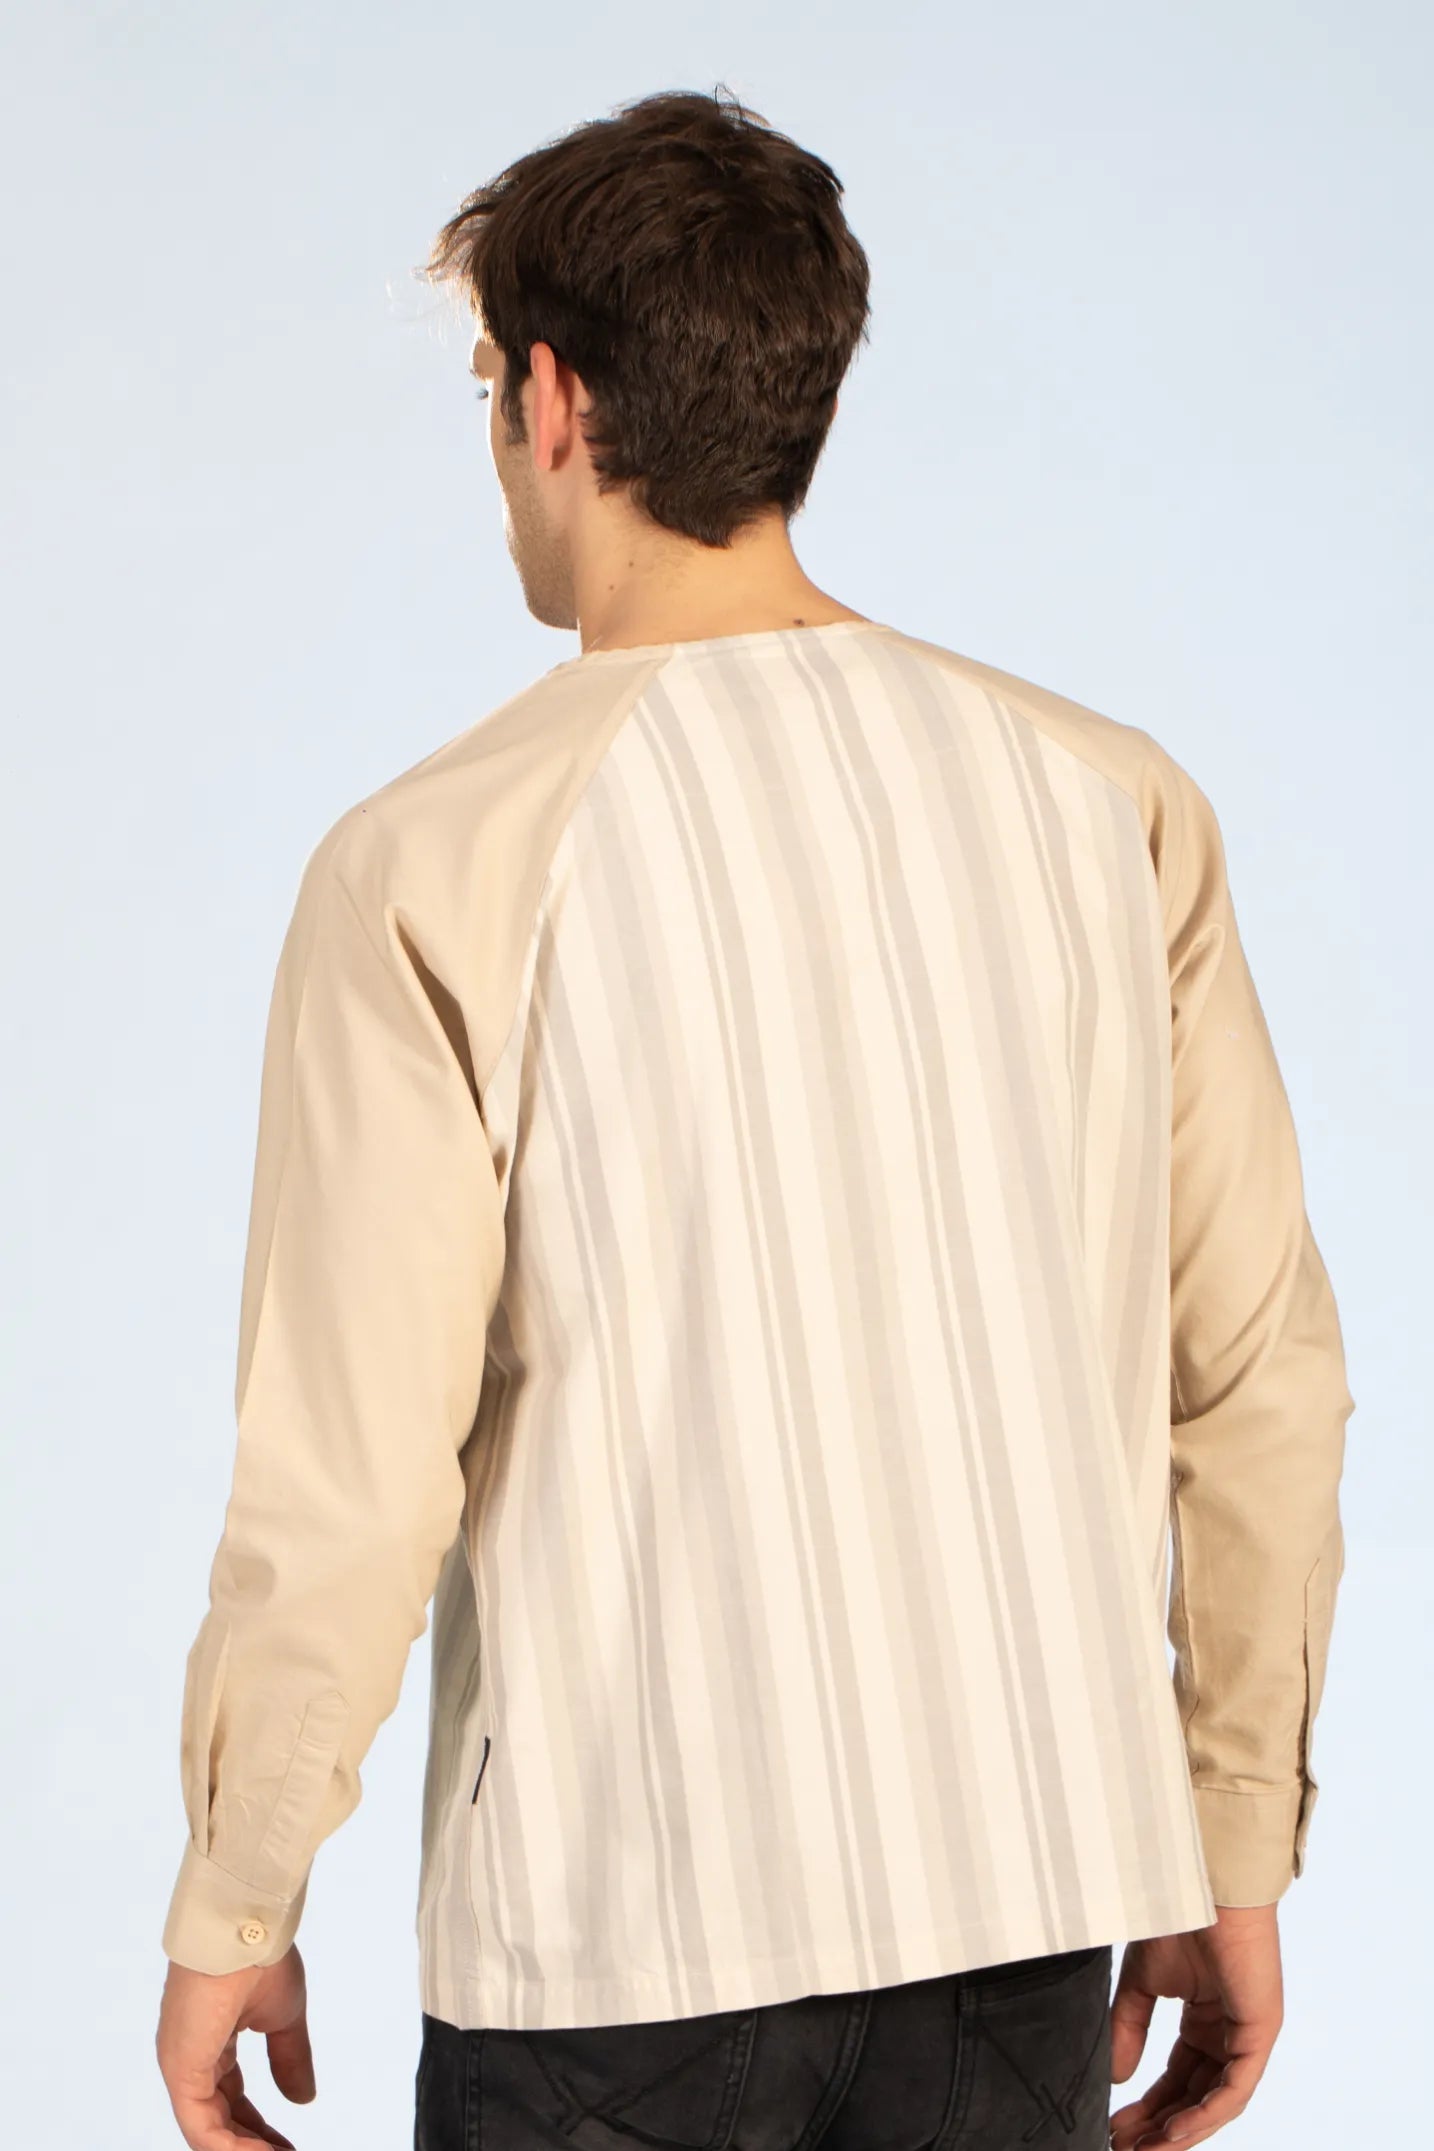 Buy Raglan Striped Shirt Online.